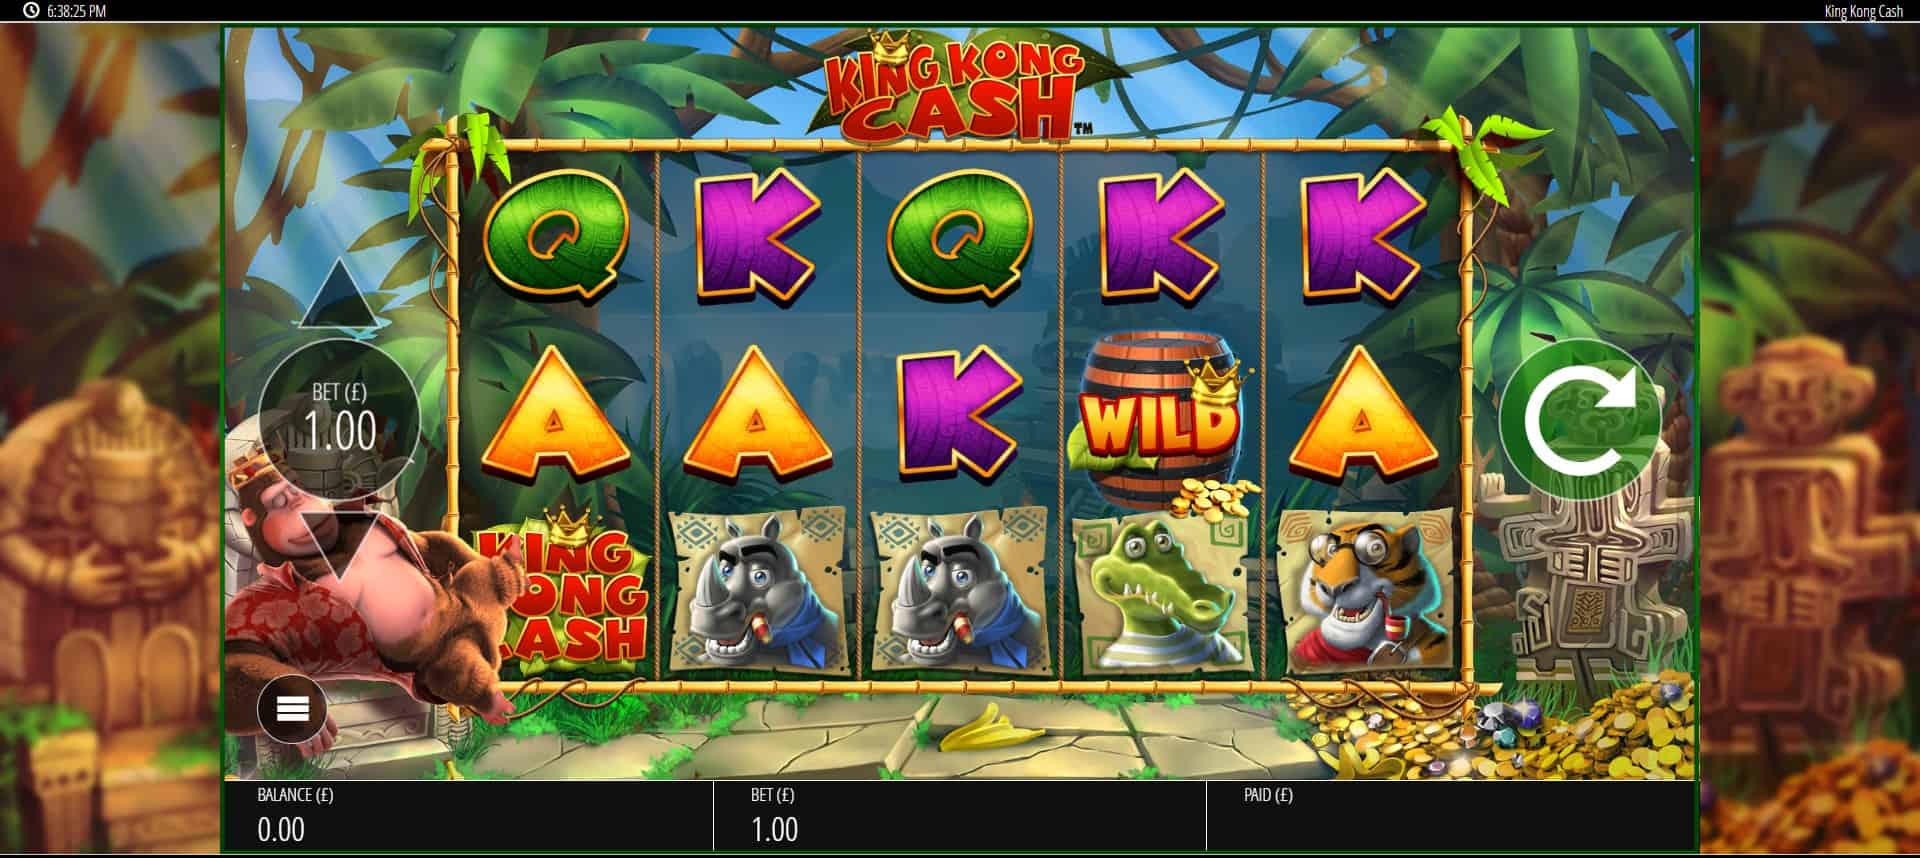 King Kong Cash Blueprint Gaming Slot Review Game play first hand E-Vegas,com